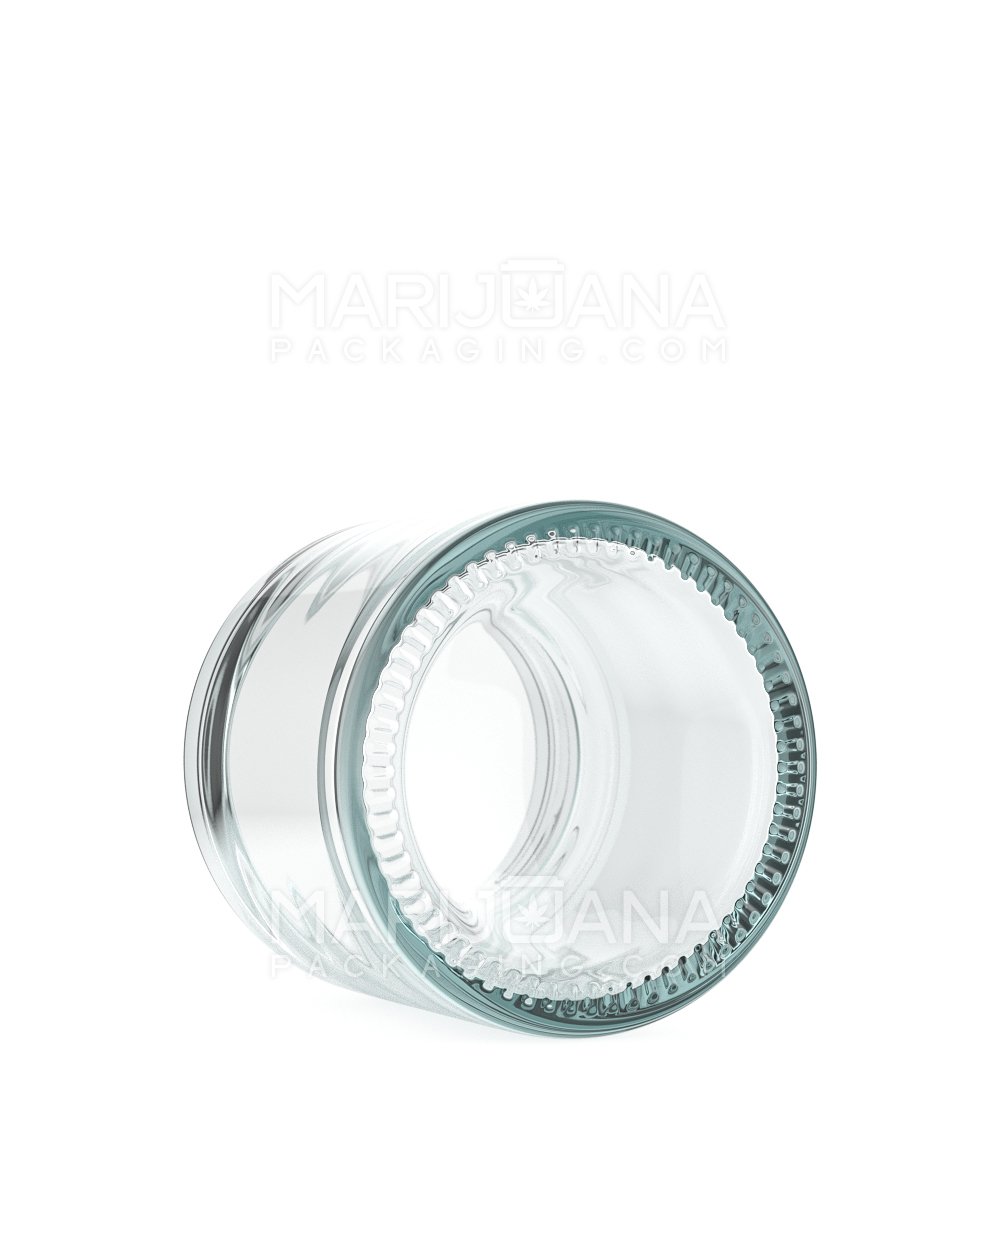 3 Ounce Clear Glass Jar - Child Resistant White Smooth Cap Custom Wedd